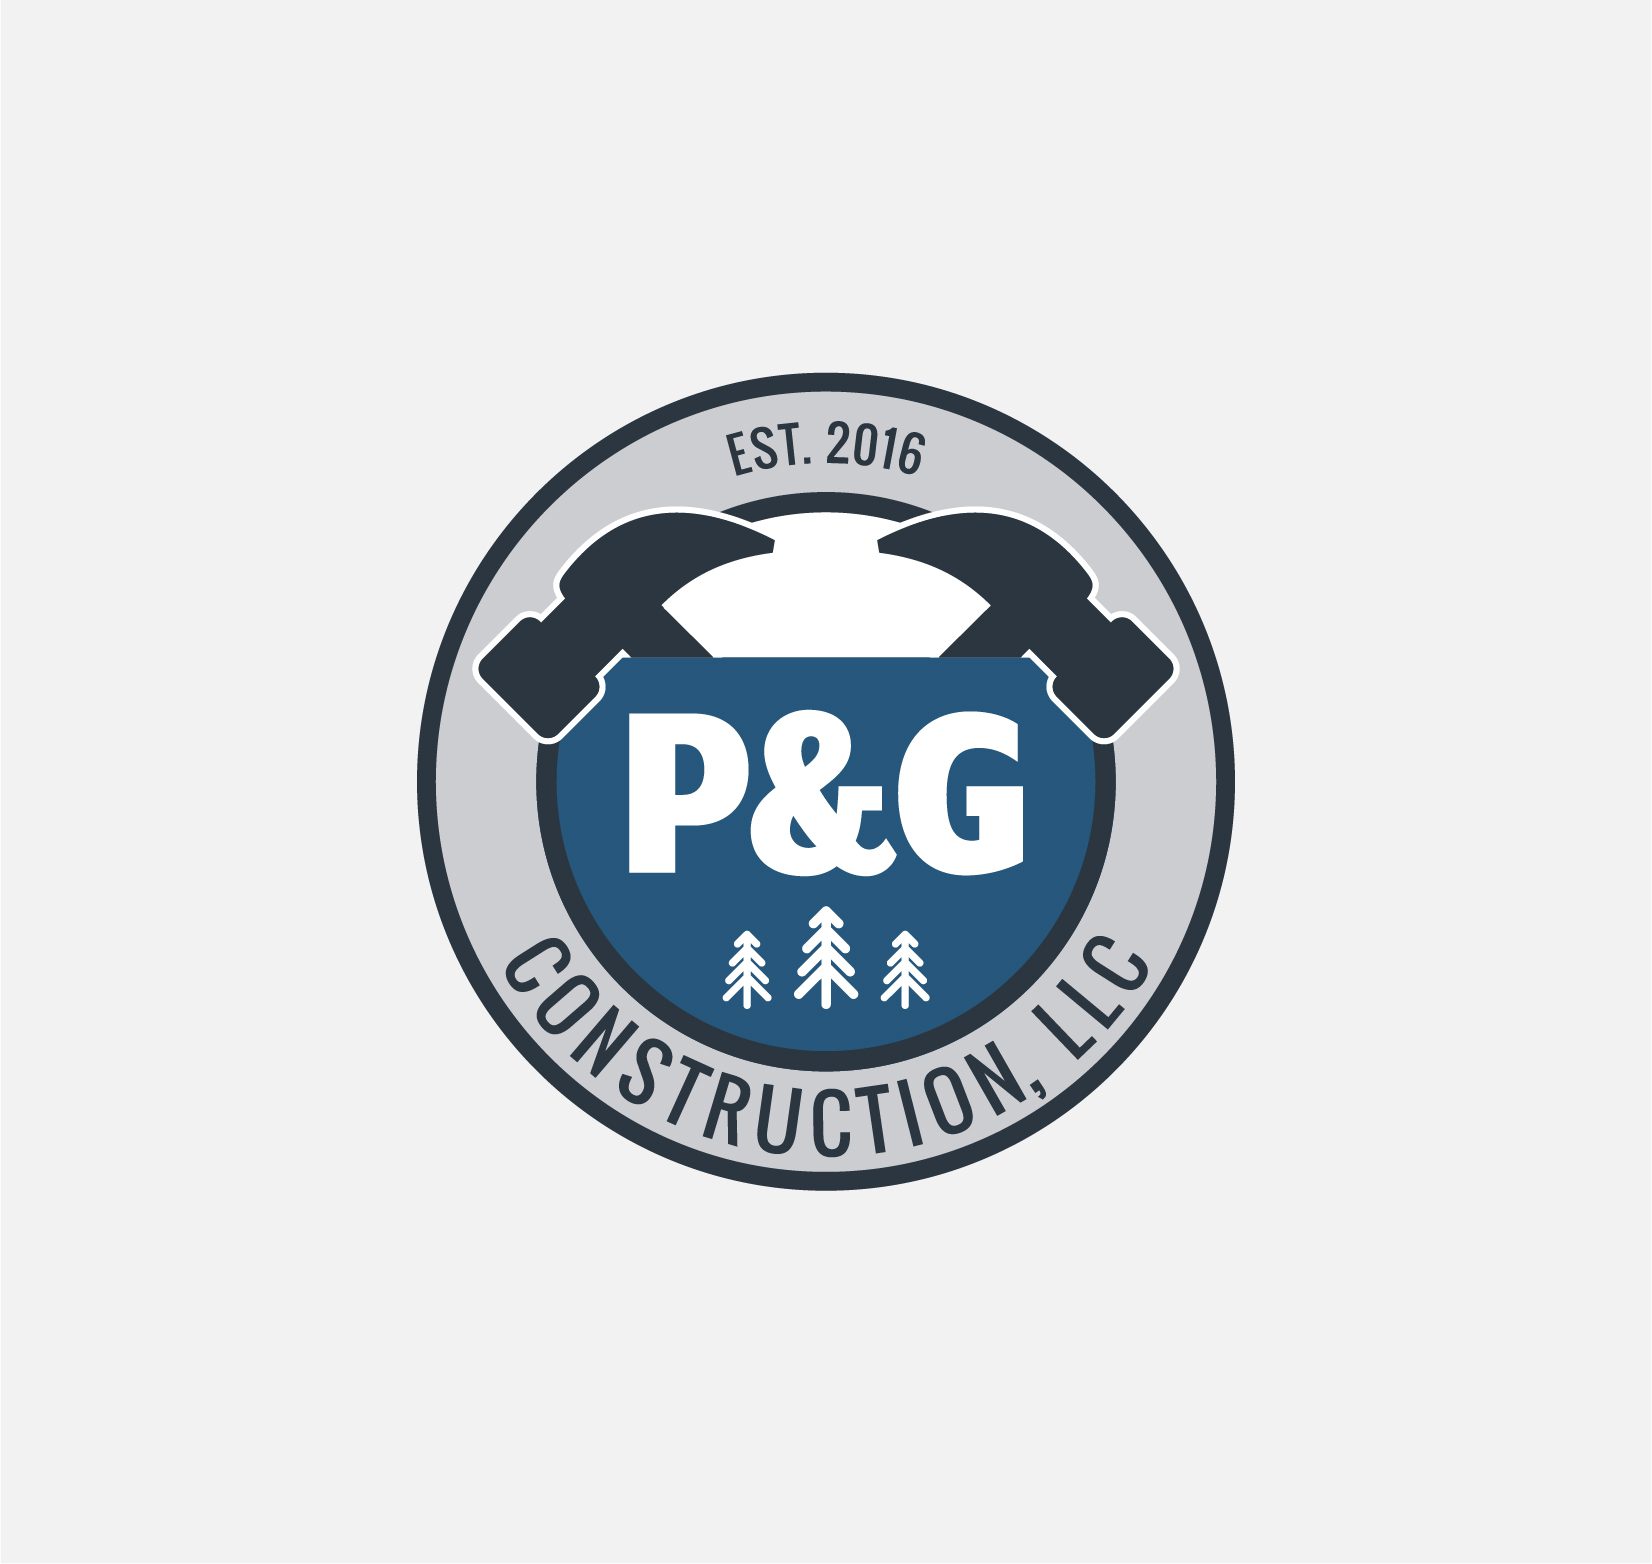 P&G Construction logo